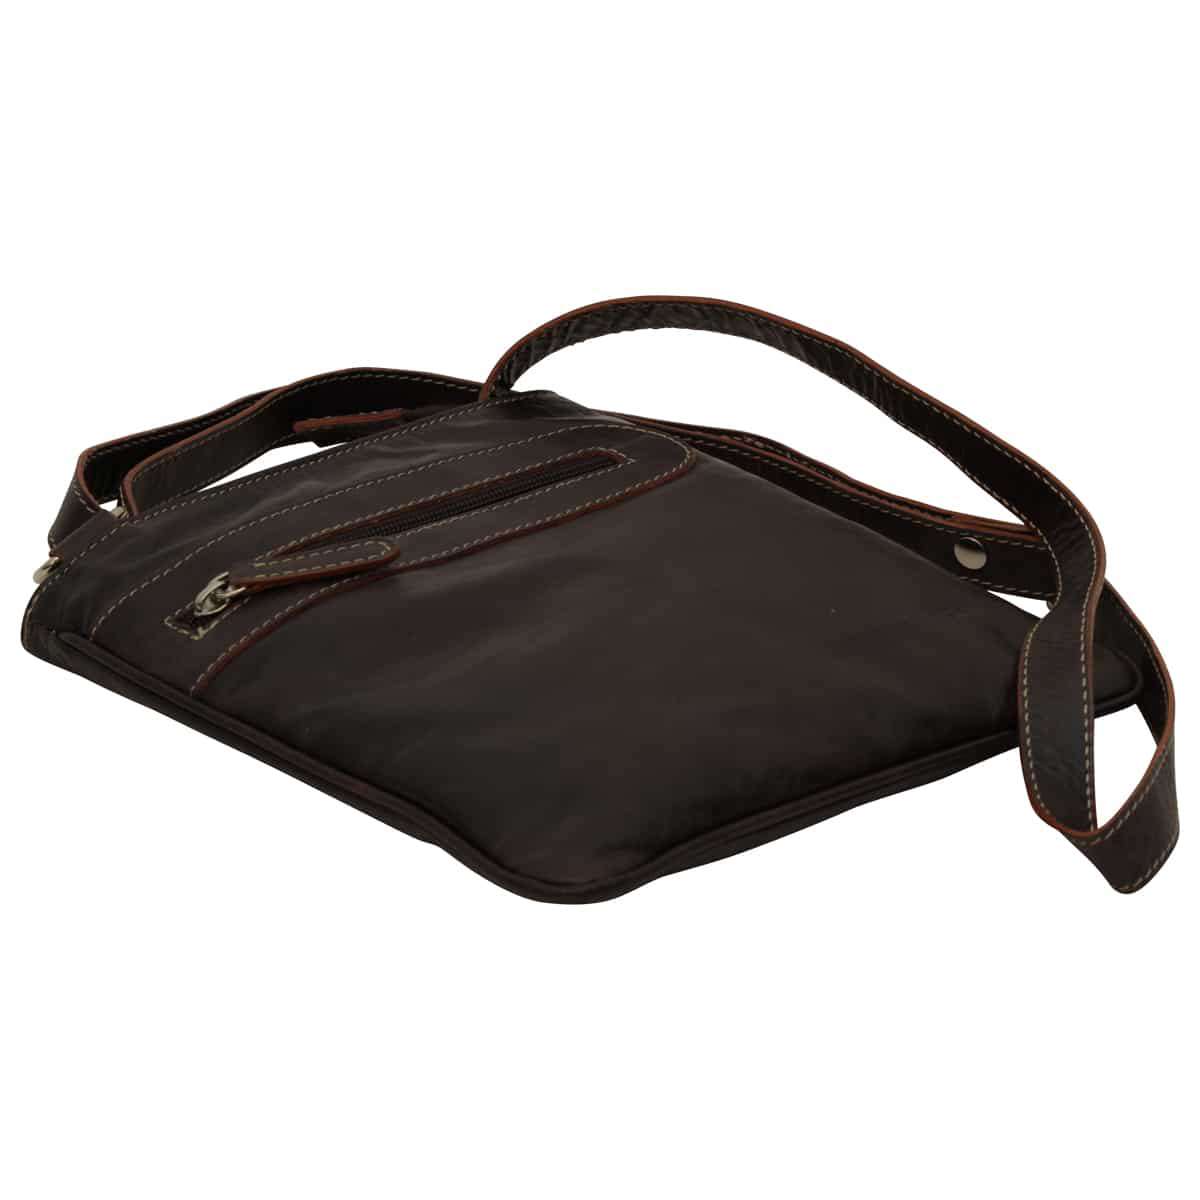 Leather cross body bag with zip pocket - Dark Brown | 086161TM US | Old Angler Firenze